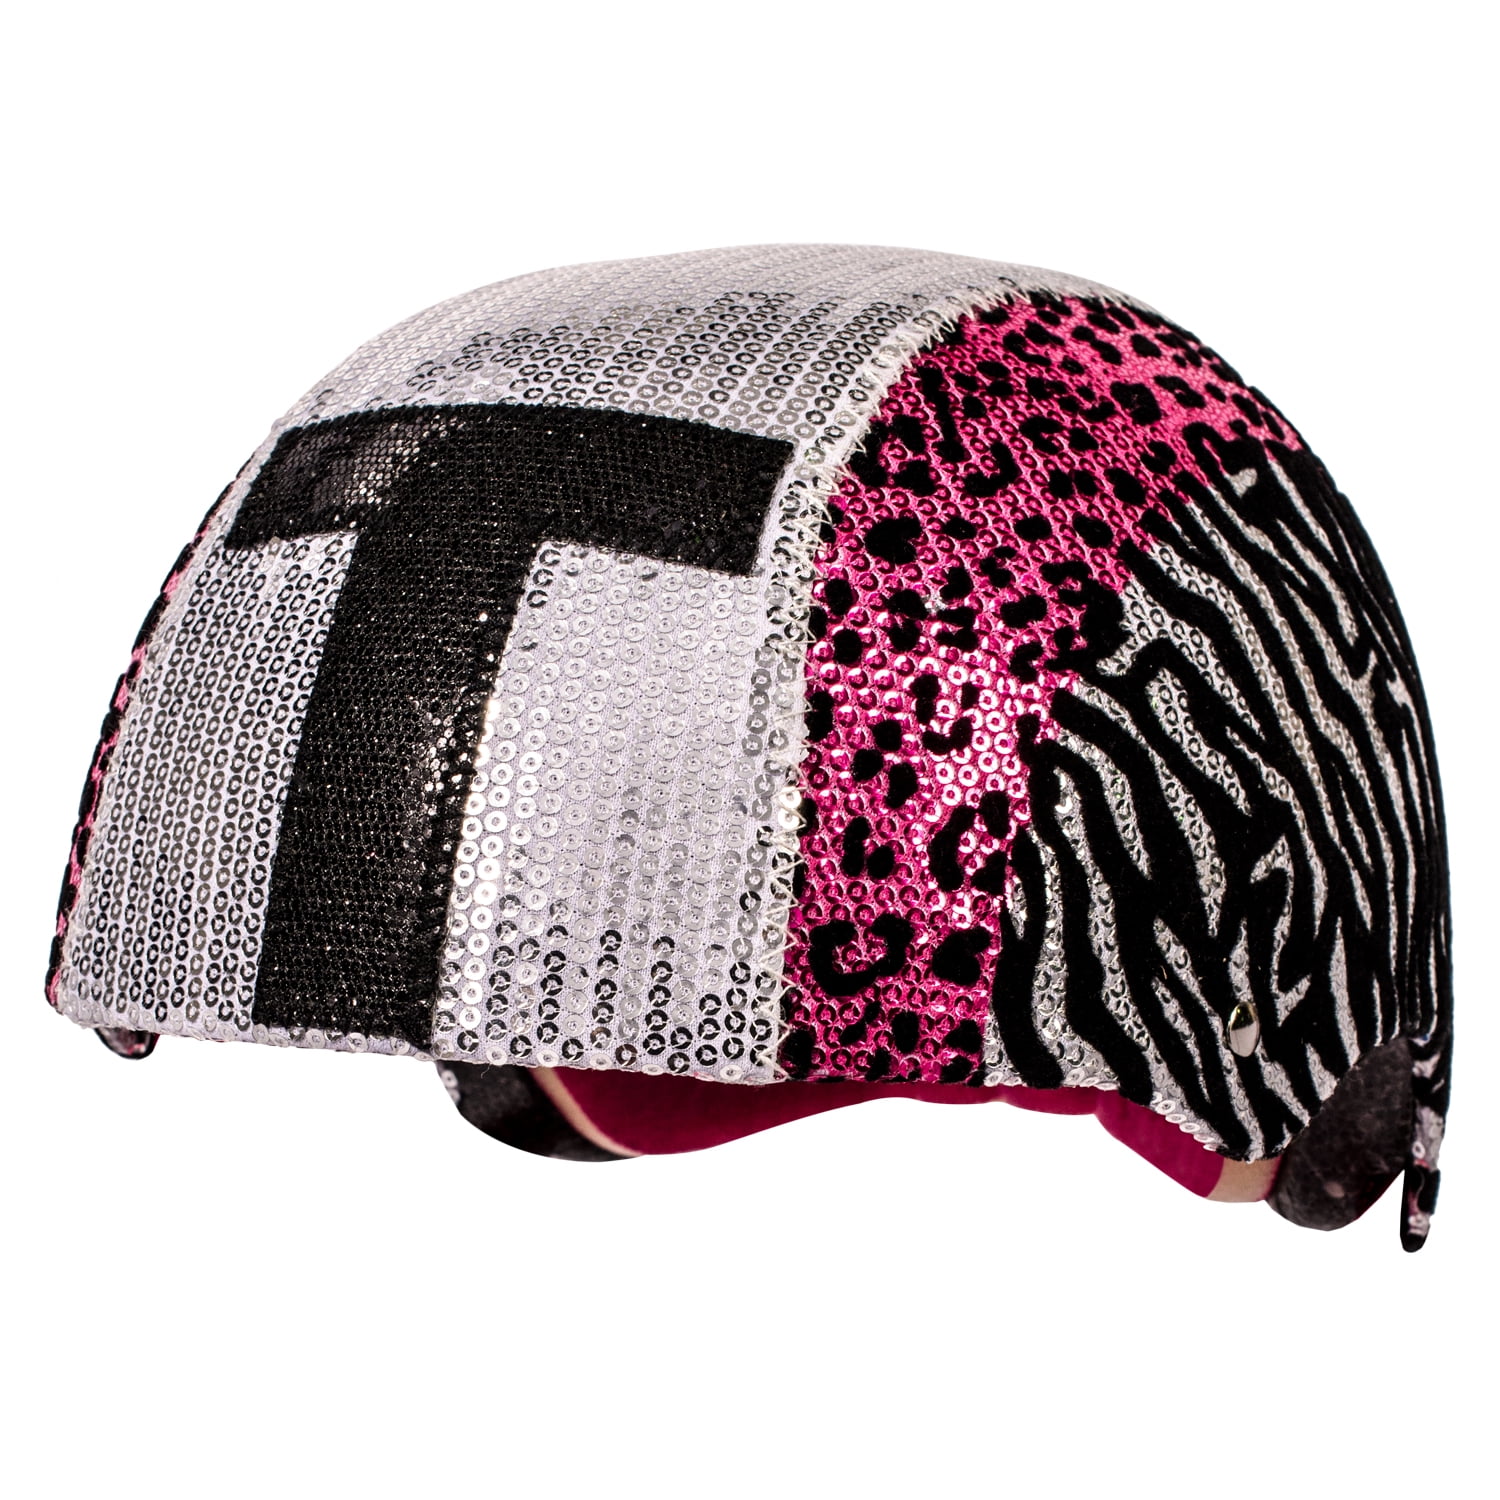 Raskullz Glam Gear Kids Bike Helmet Sequins Zebra Pink Leopard Print One Size 